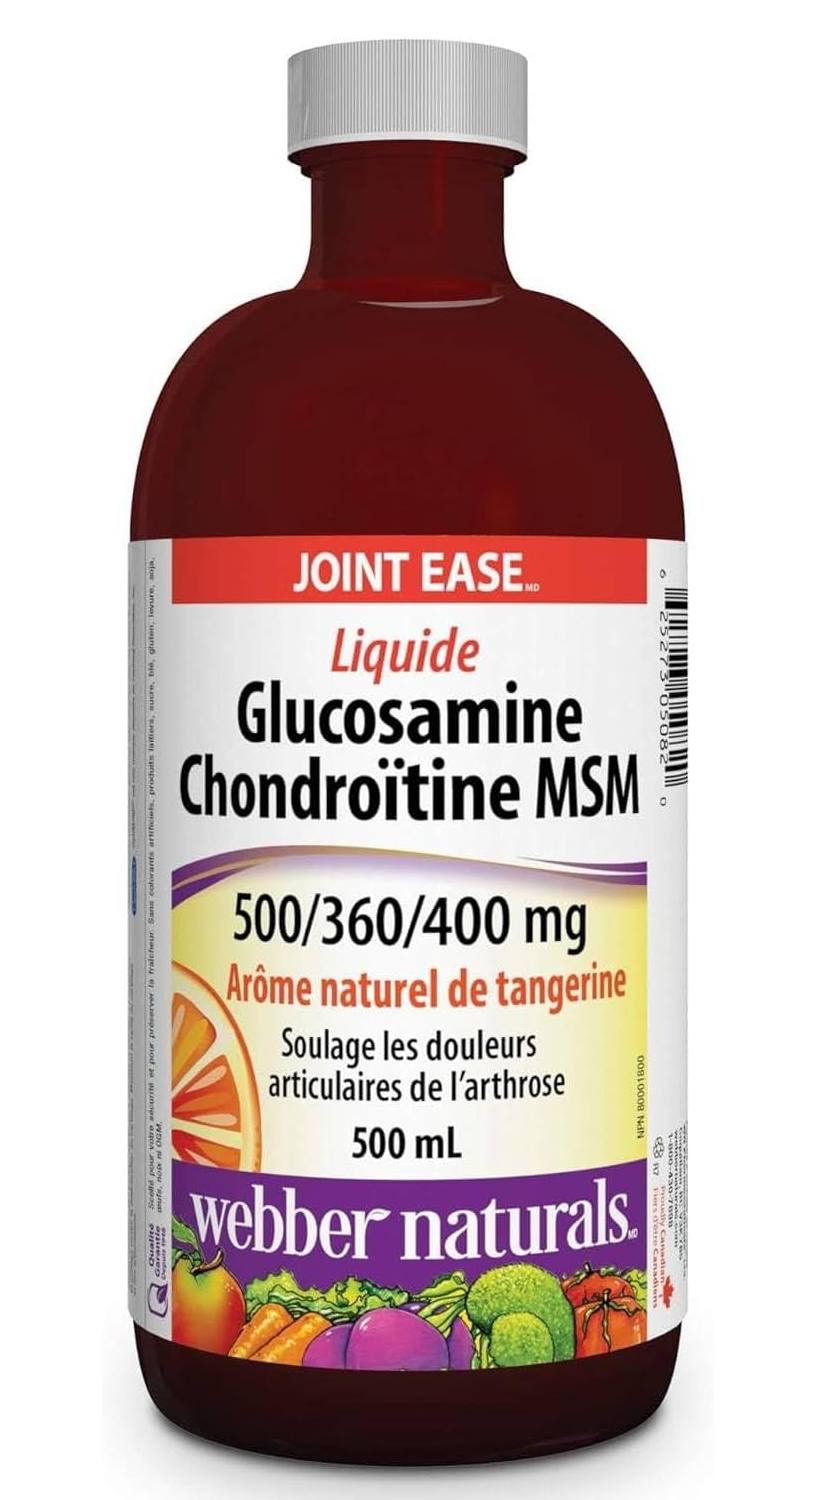 Webber Naturals Glucosamine Chondroitin MSM 500/360/400 mg 500mL / Natural Tangerine Flavour